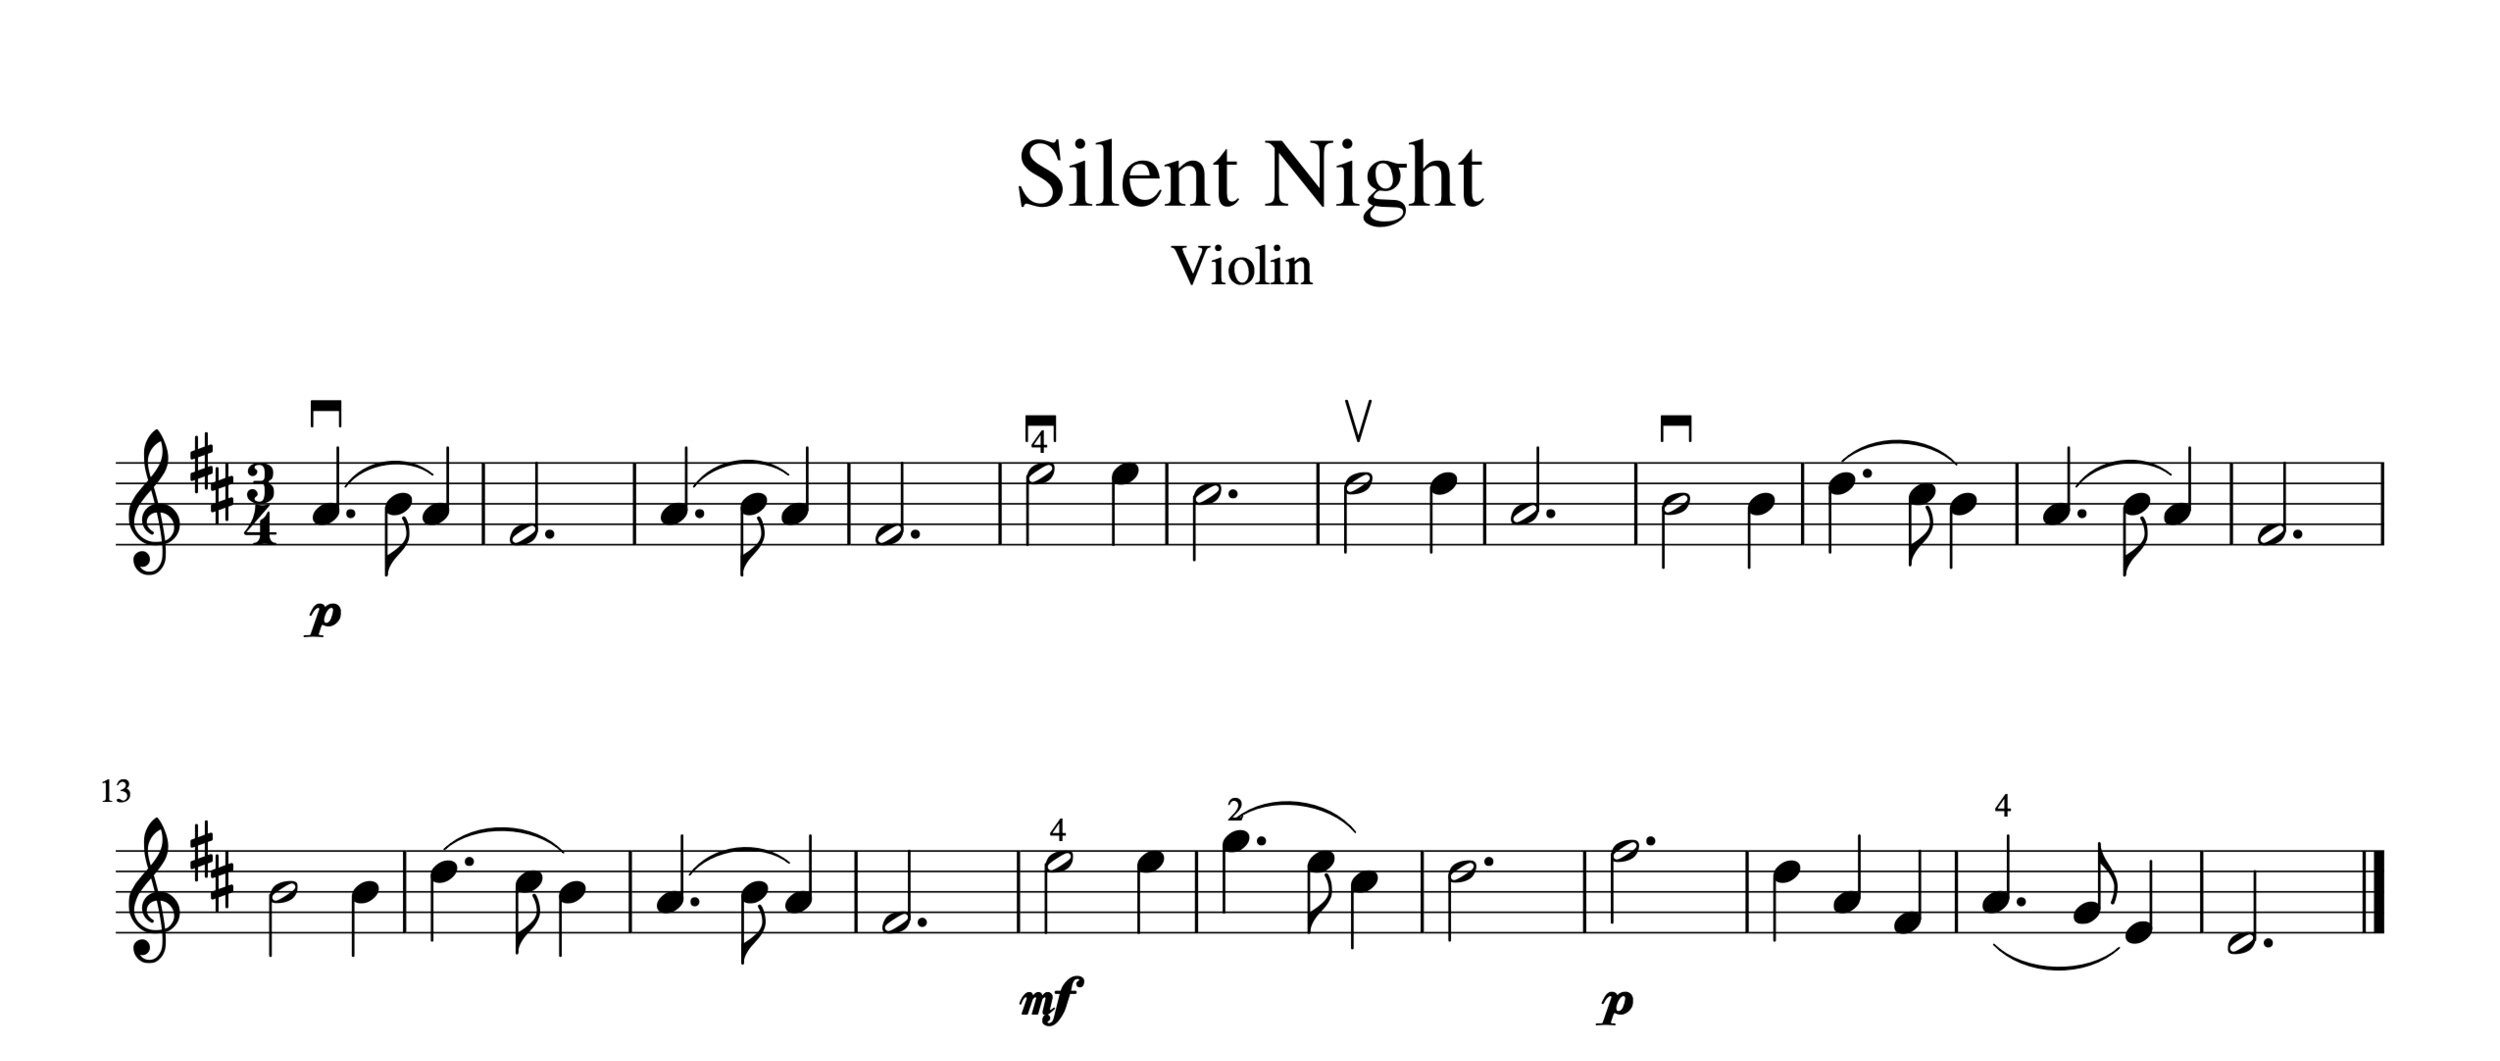 Night Shift: 1st Violin